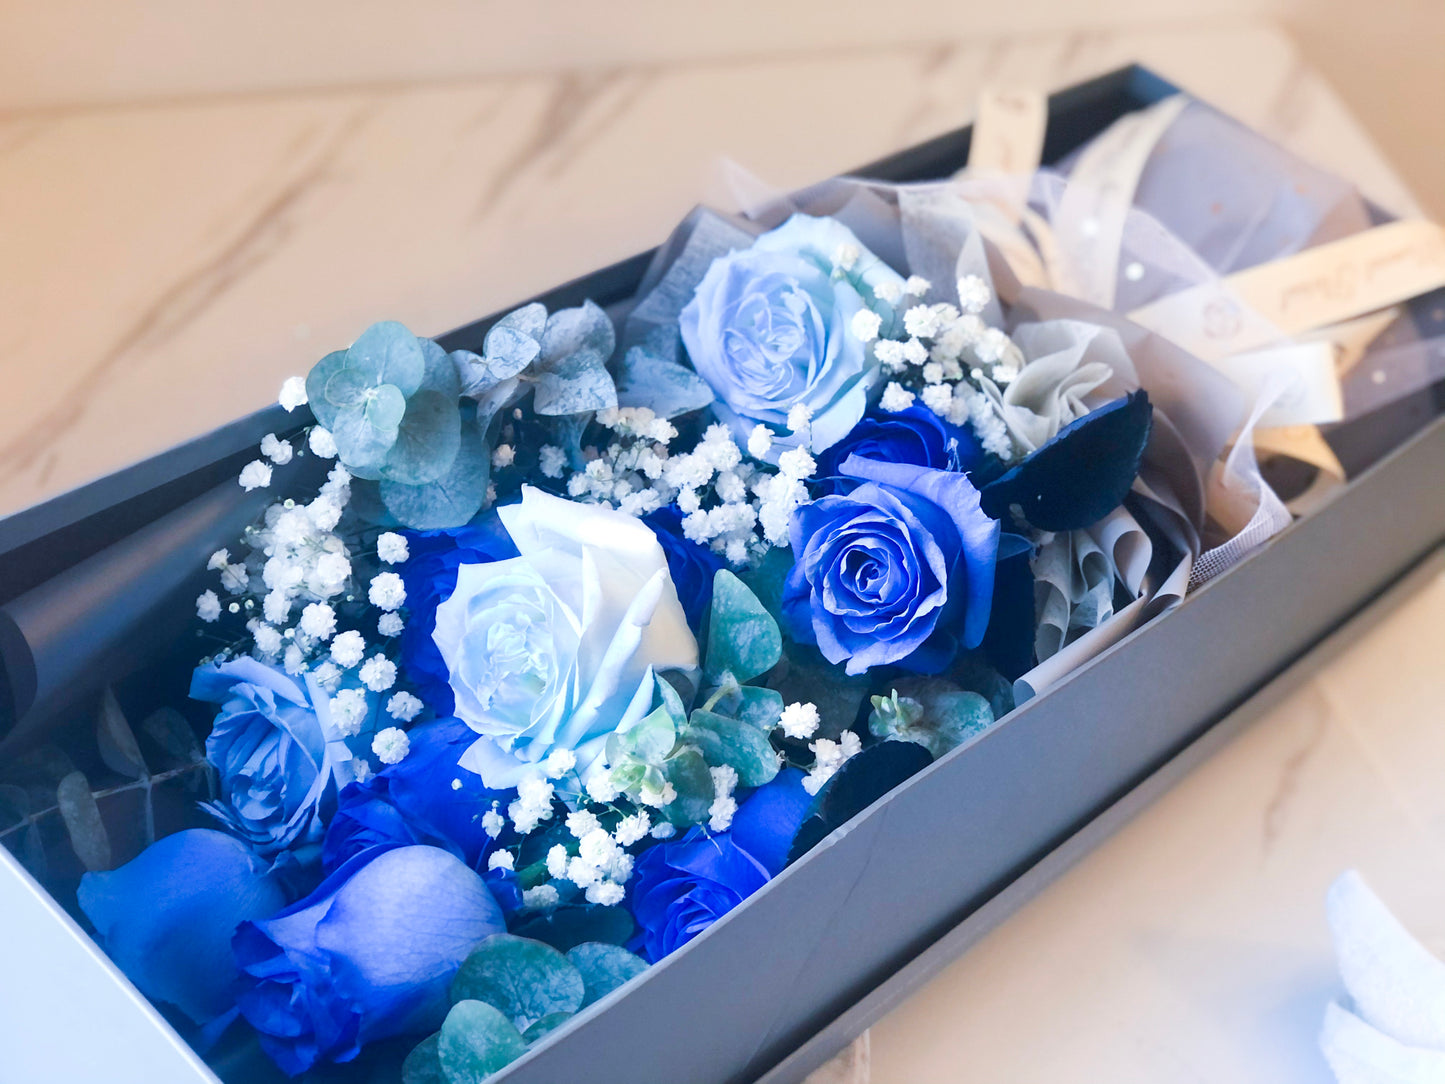 [FRESH FLOWER] 梦幻蓝玫瑰花束长礼盒